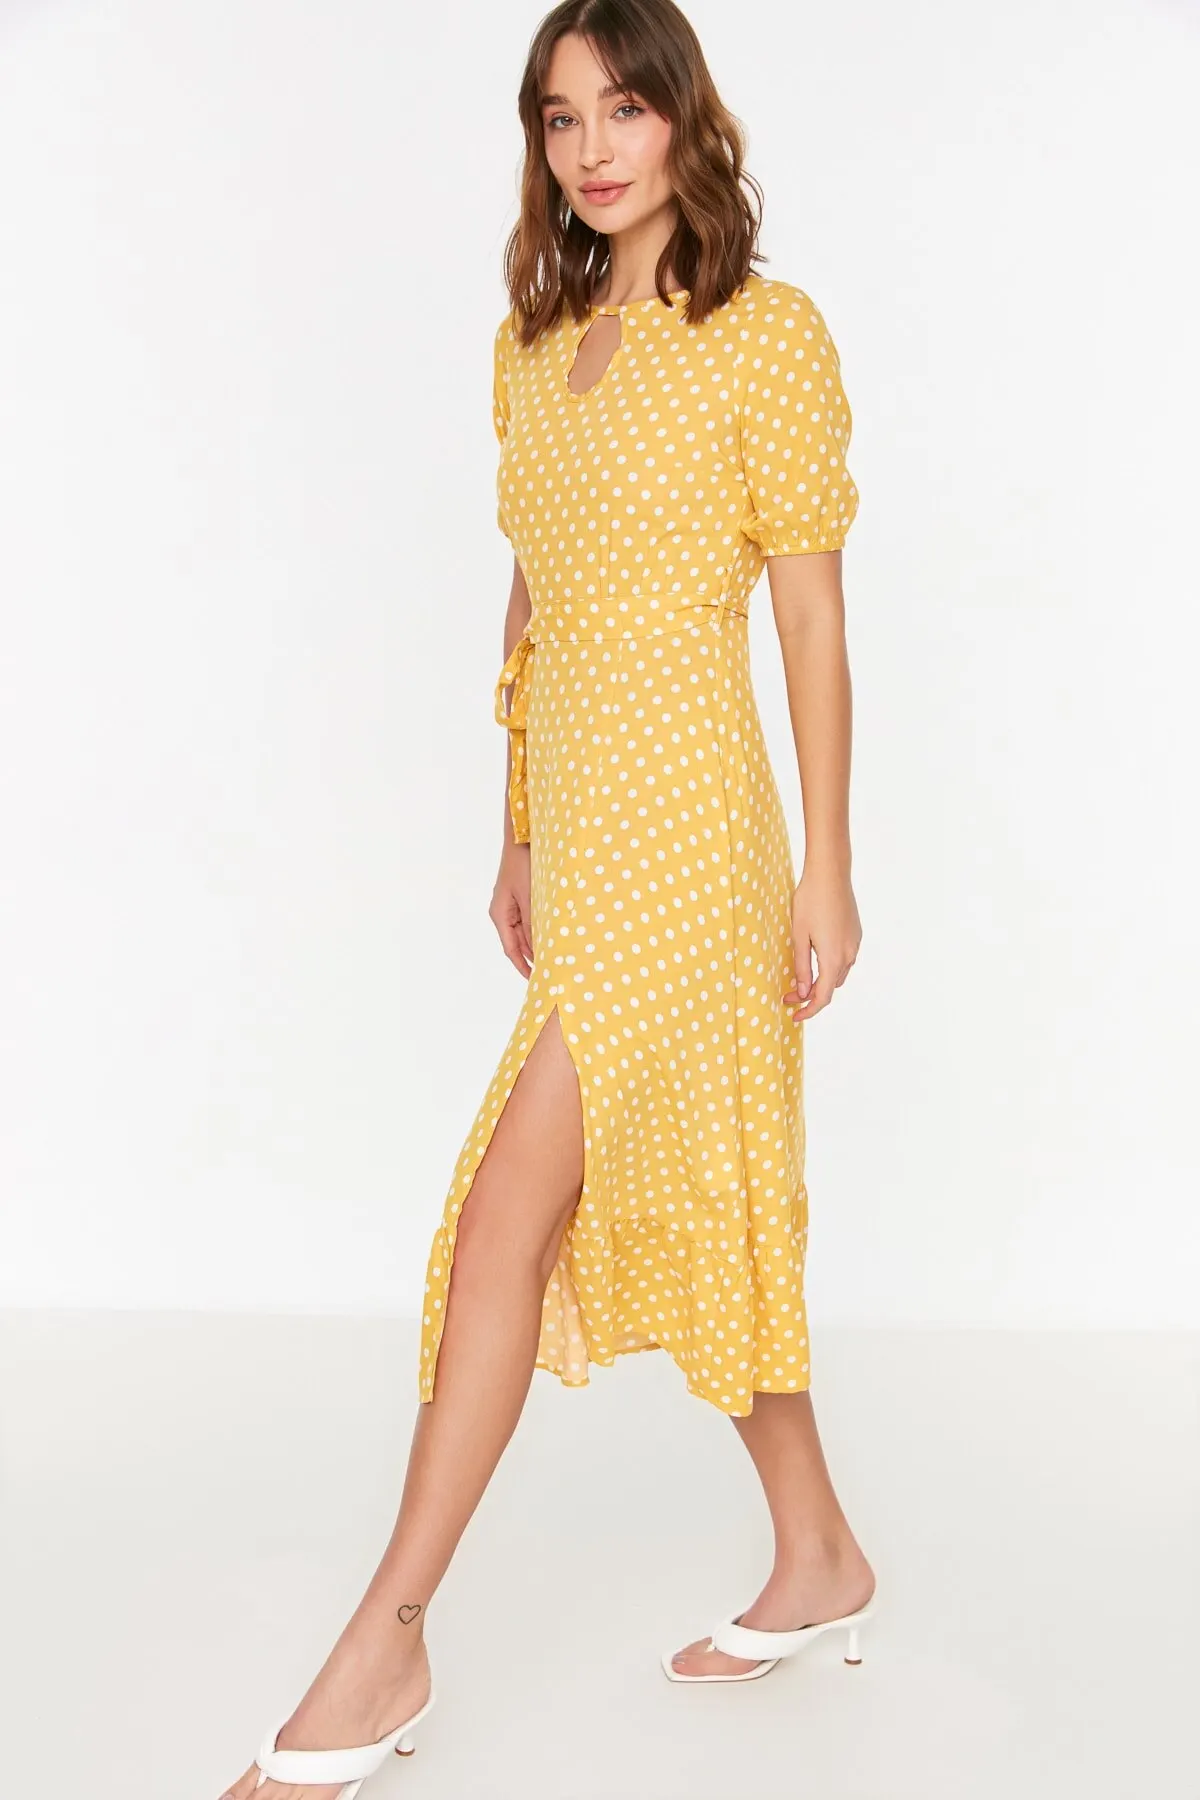 

Women's Dress Mustard Belted Polka Dot Elegant Fashion Casual Casual Comfortable Short Sleeve Summer Boho Beach Dress